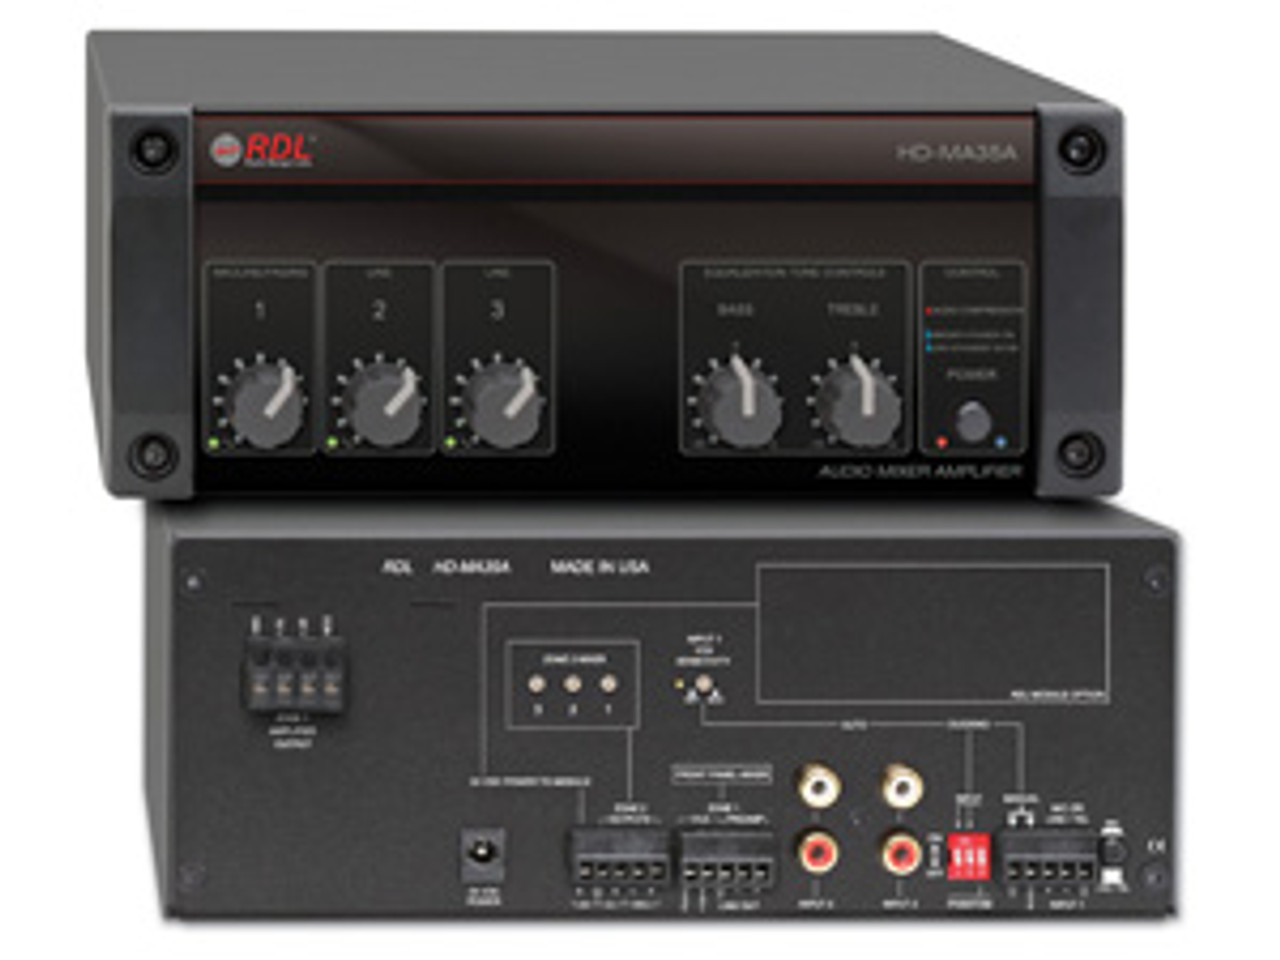 RDL HD-MA35A 35 Watt Mixer Amplifier with Power Supply (HD-MA35A)